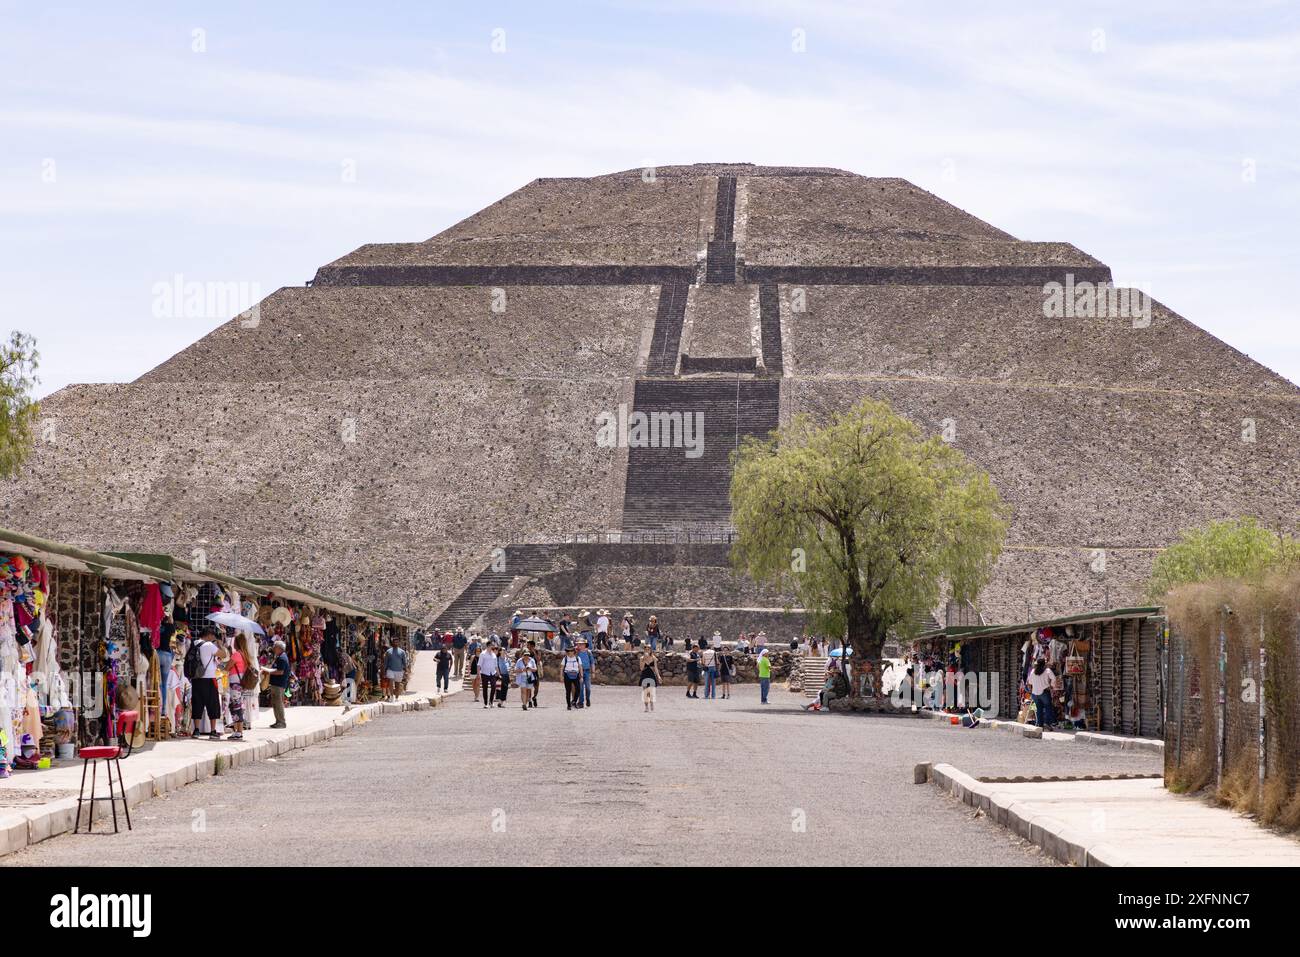 Traders on the Avenue of the Dead und die Pyramide des Mondes oder der Mondpyramide, Teotihuacan antike mesoamerikanische Stadt, Teotihuacan, Mexiko reisen. Stockfoto